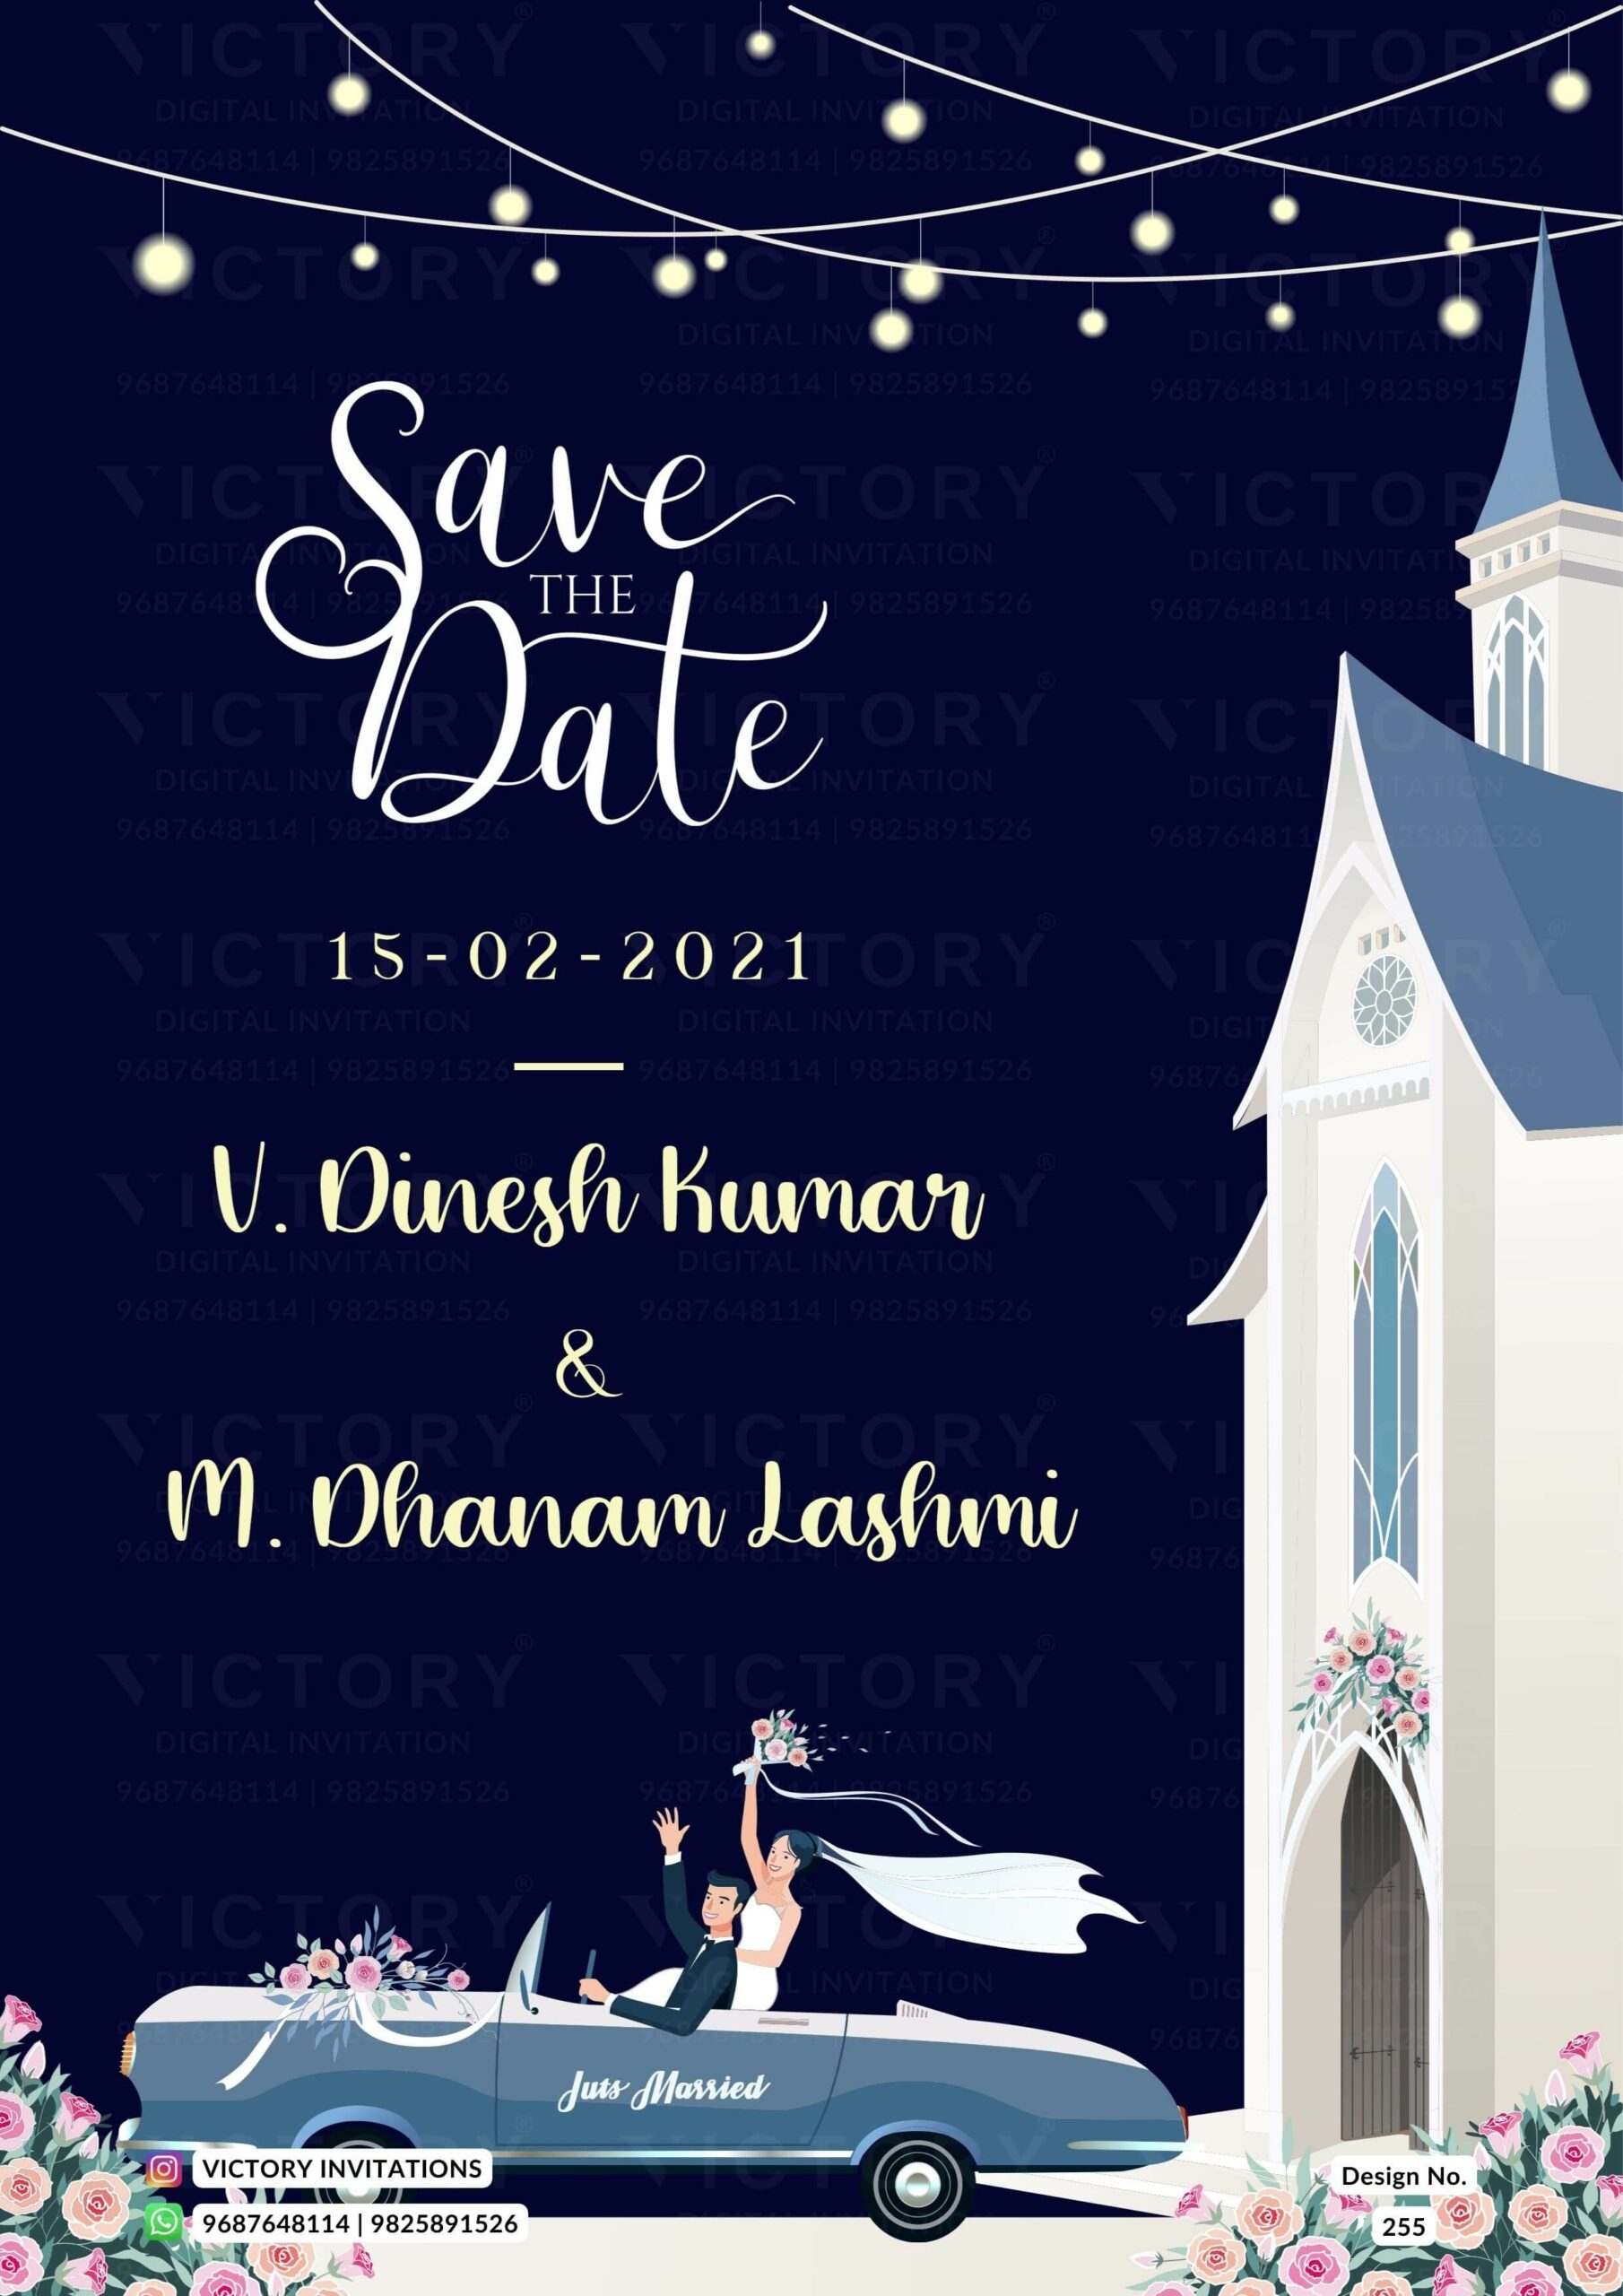 Save the Date digital invitation card design no.255